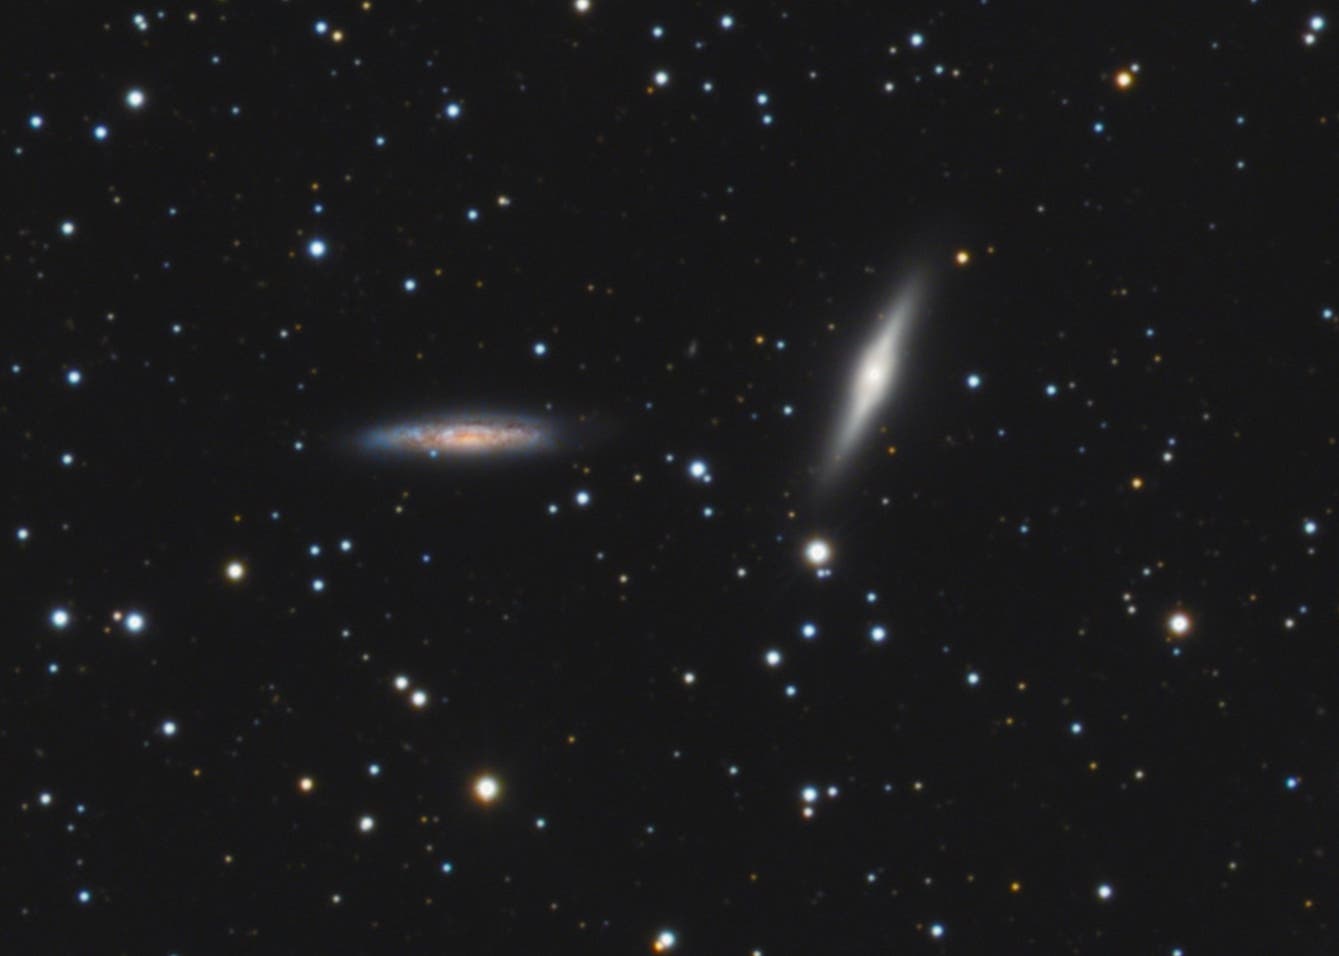 Galaxien NGC 7339 und NGC 7332 